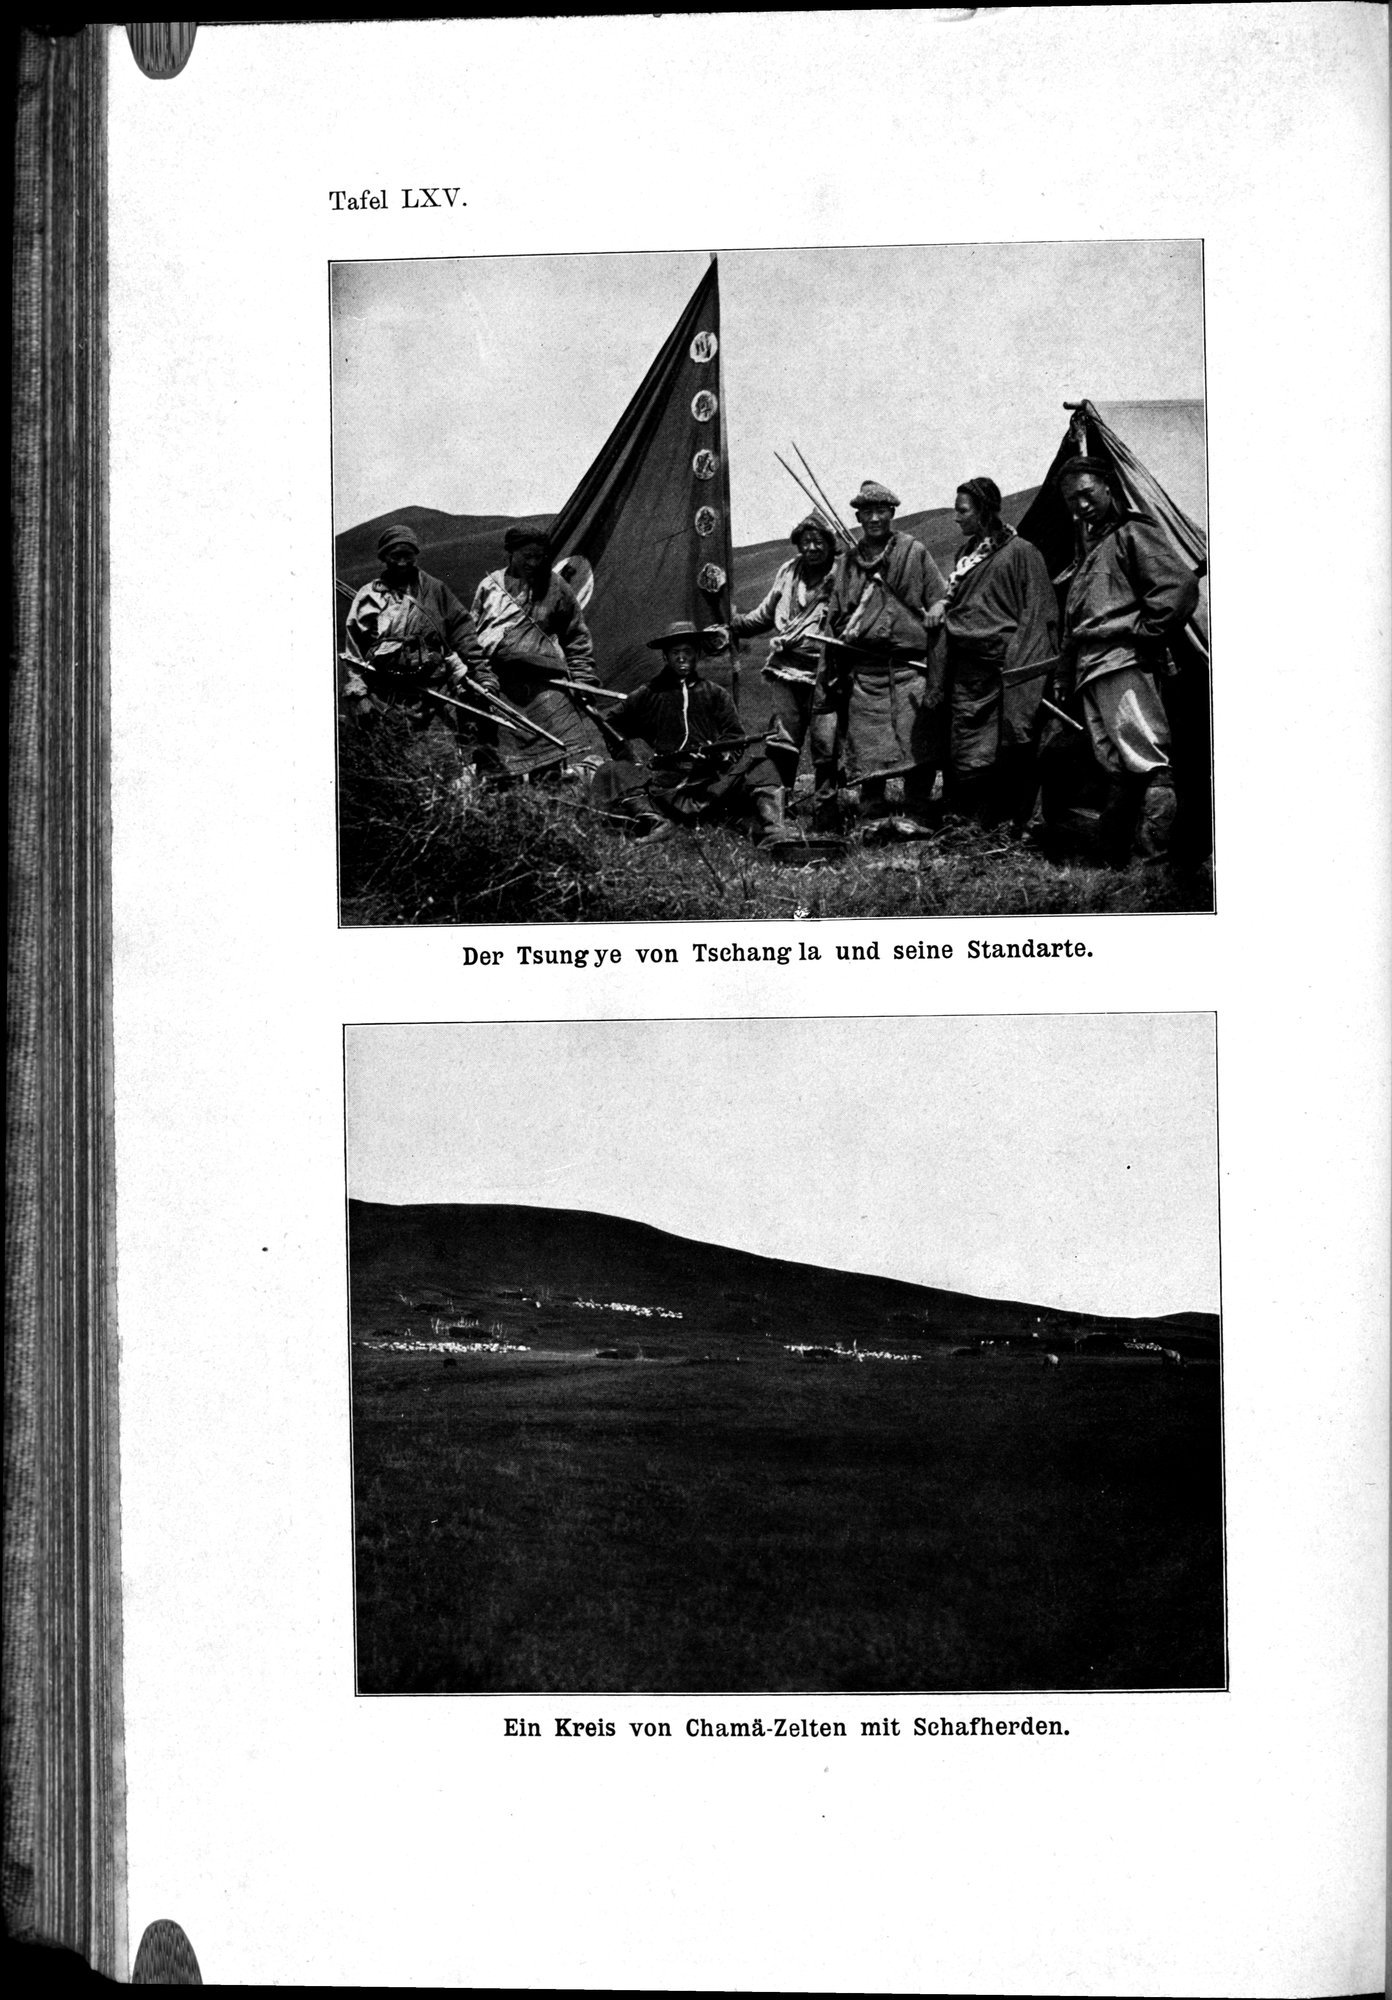 Meine Tibetreise : vol.2 / Page 340 (Grayscale High Resolution Image)